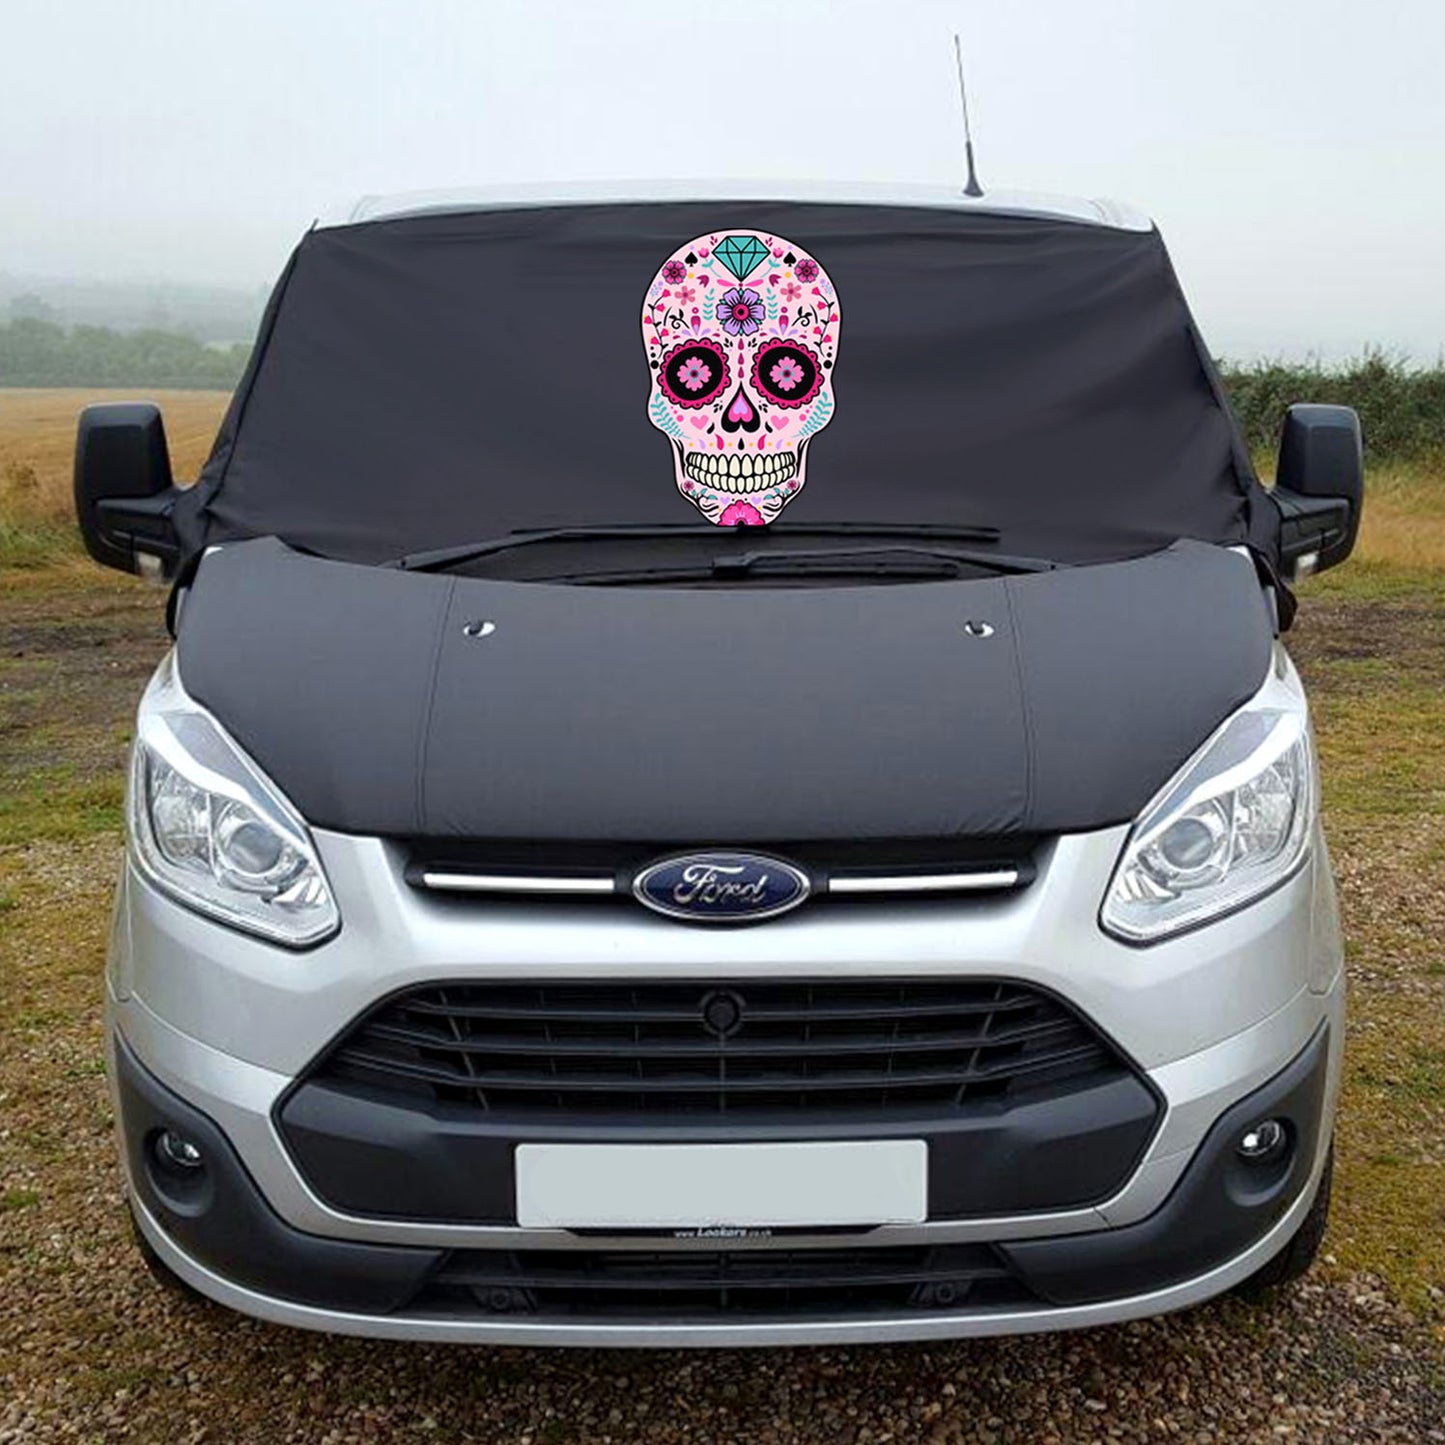 Ford Transit Custom Screen Wrap - Sugar Skull